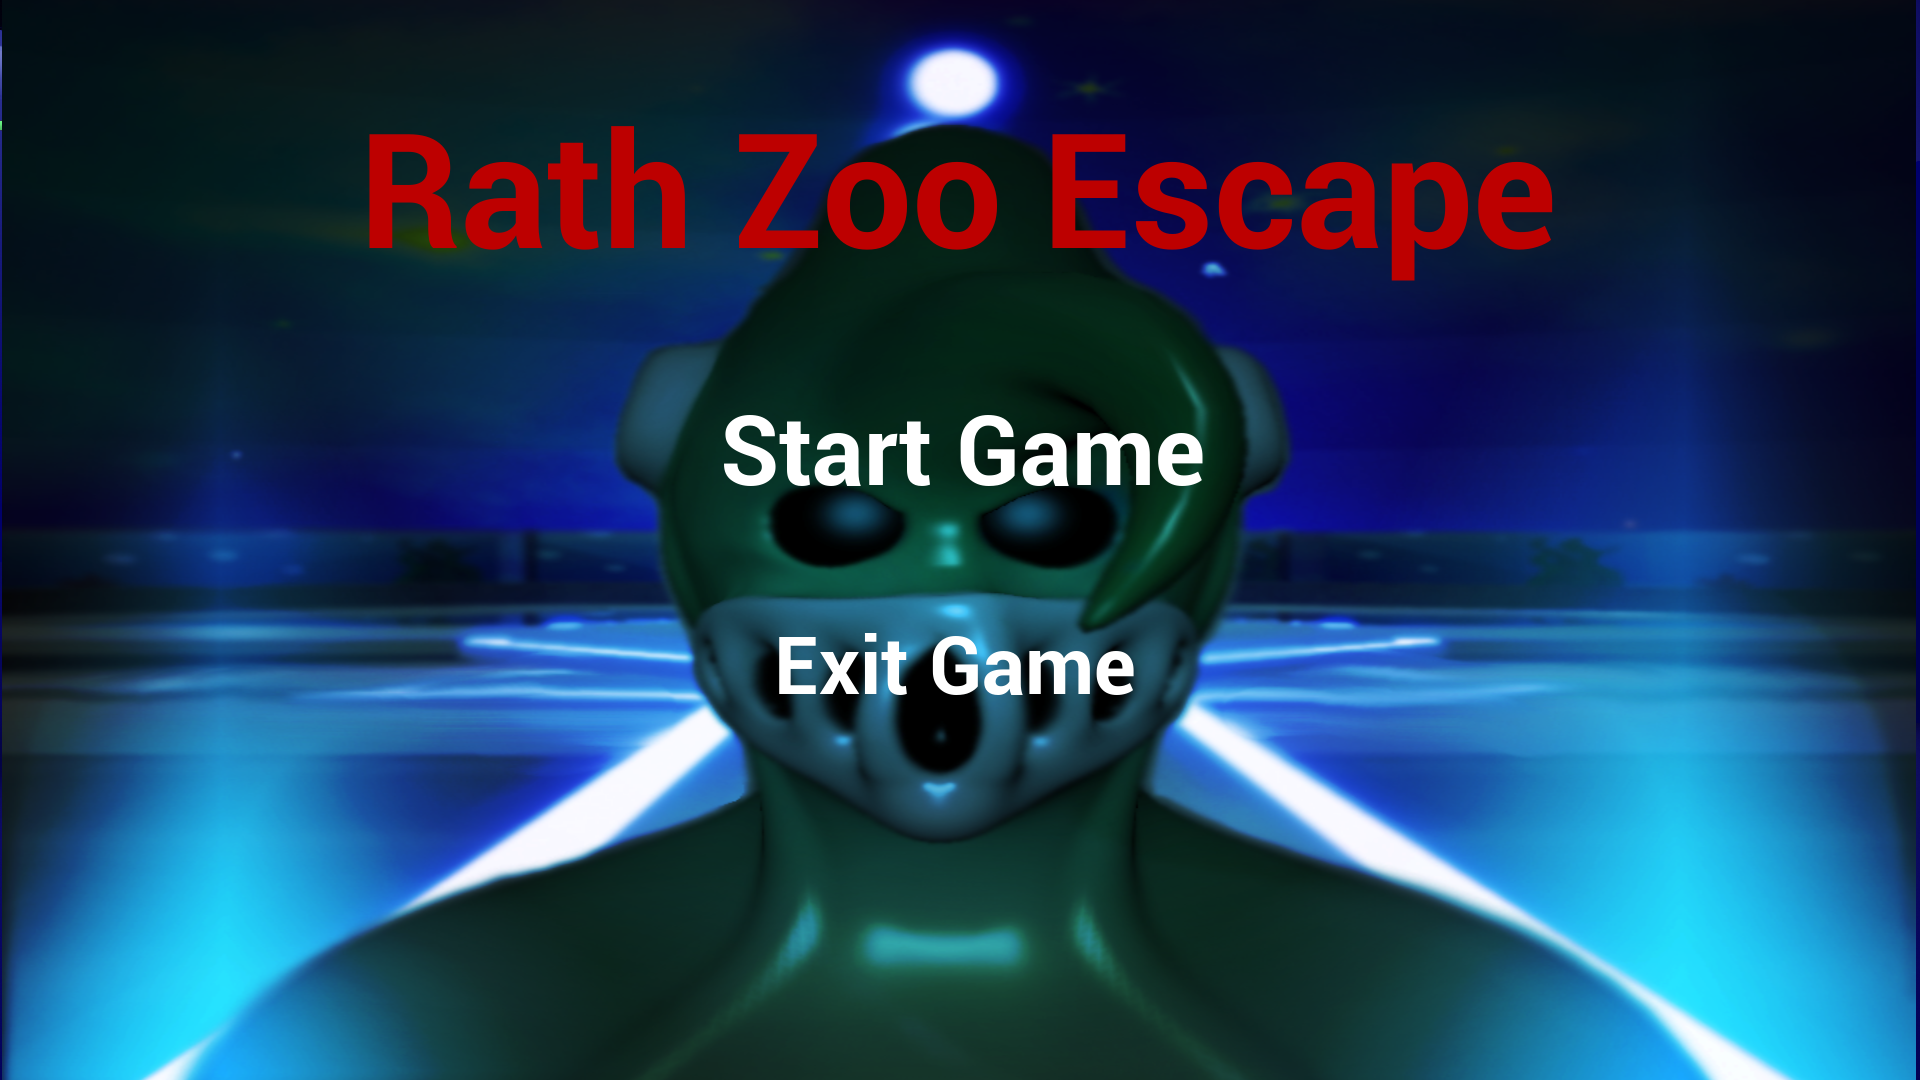 Rath Zoo Escape